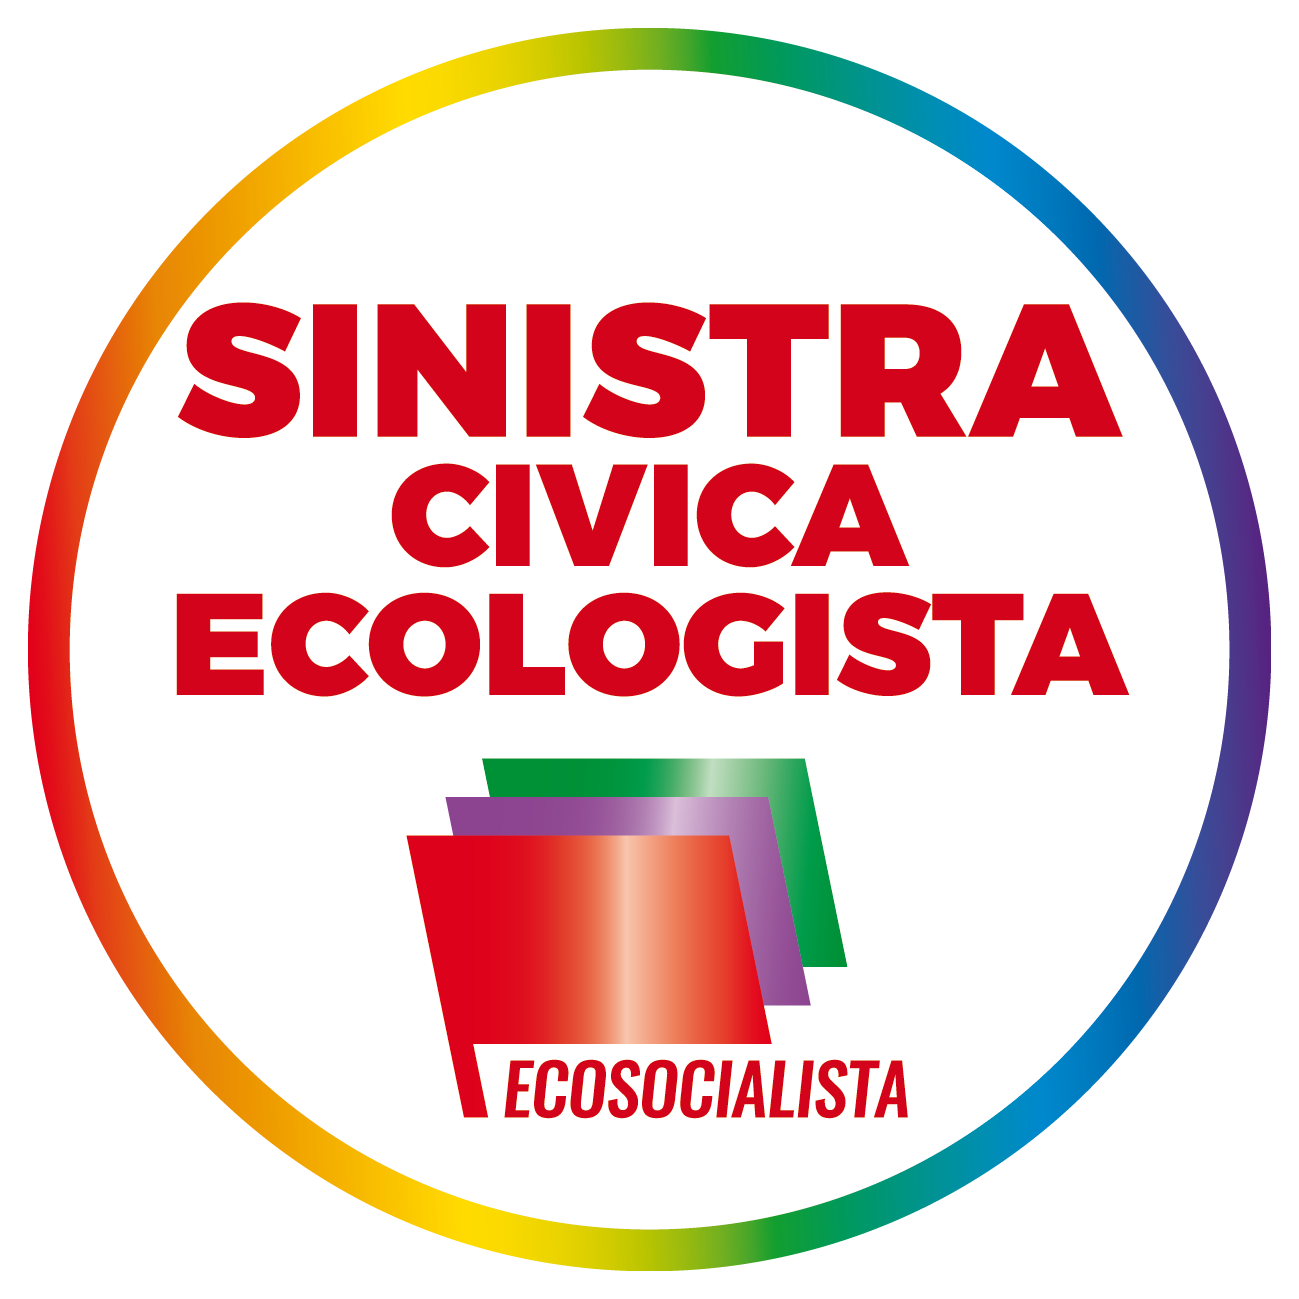 Sinistra Civica Ecologista